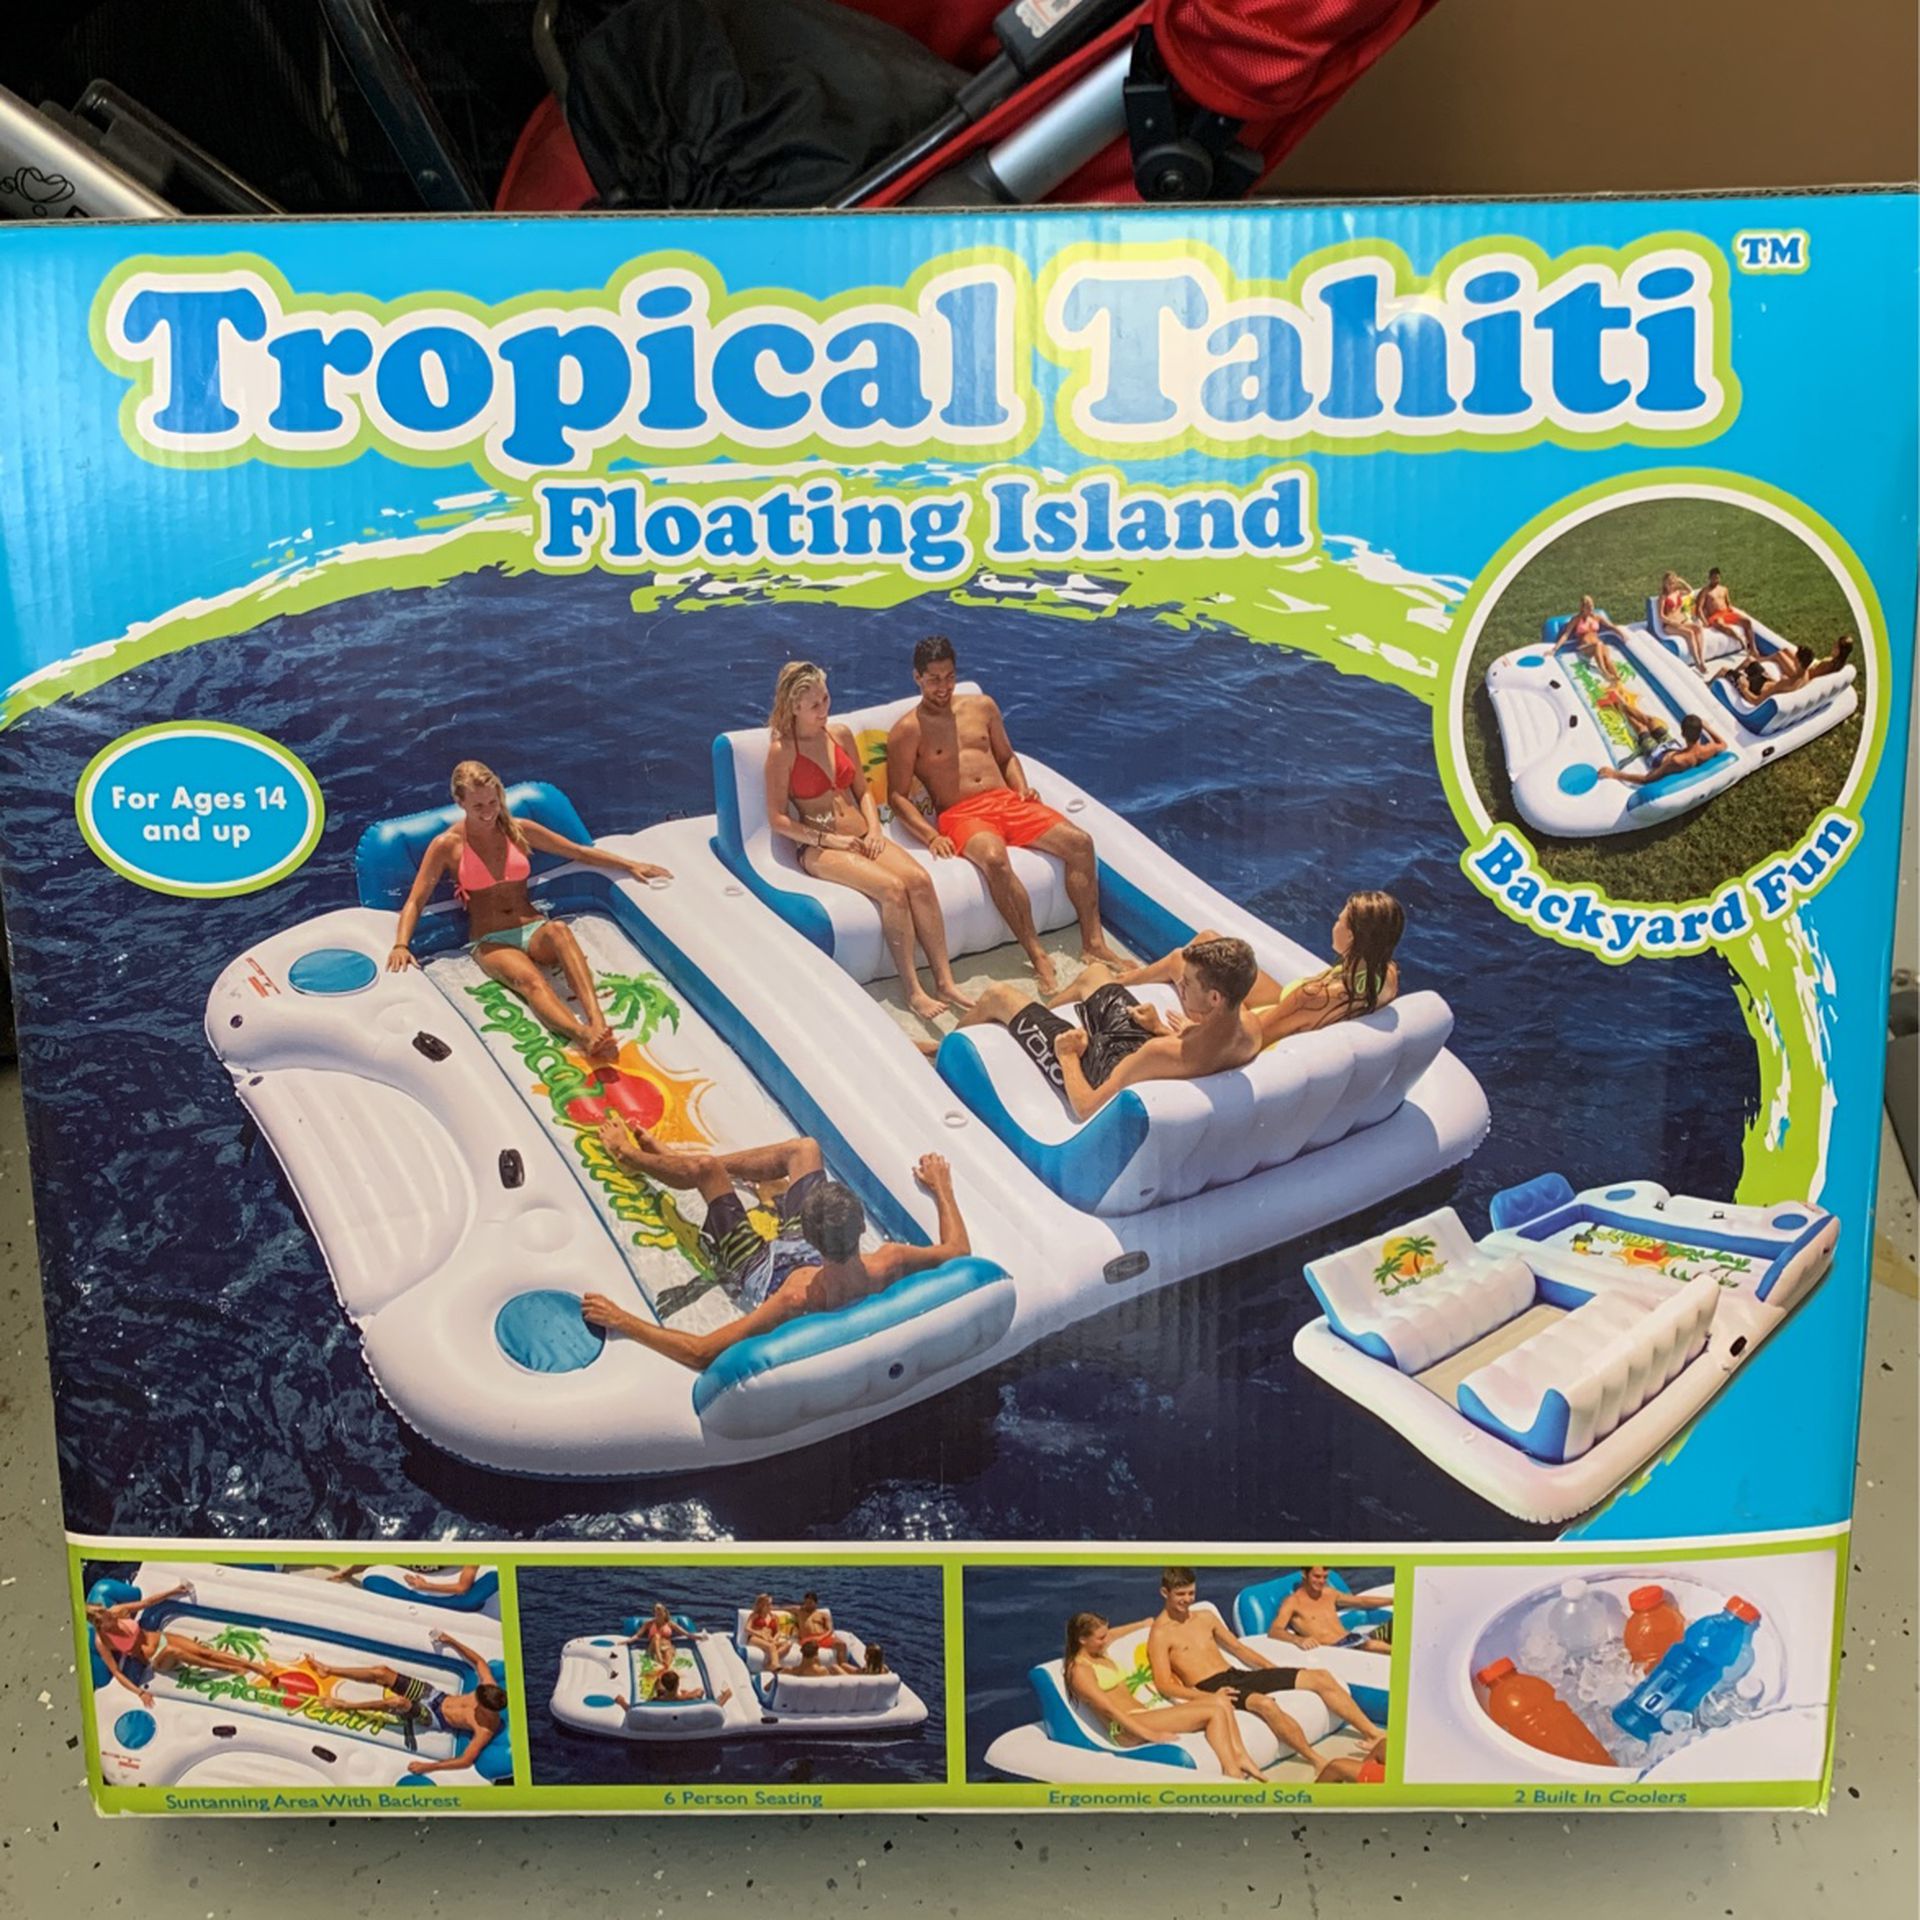 Tropical Tahiti Floating Island